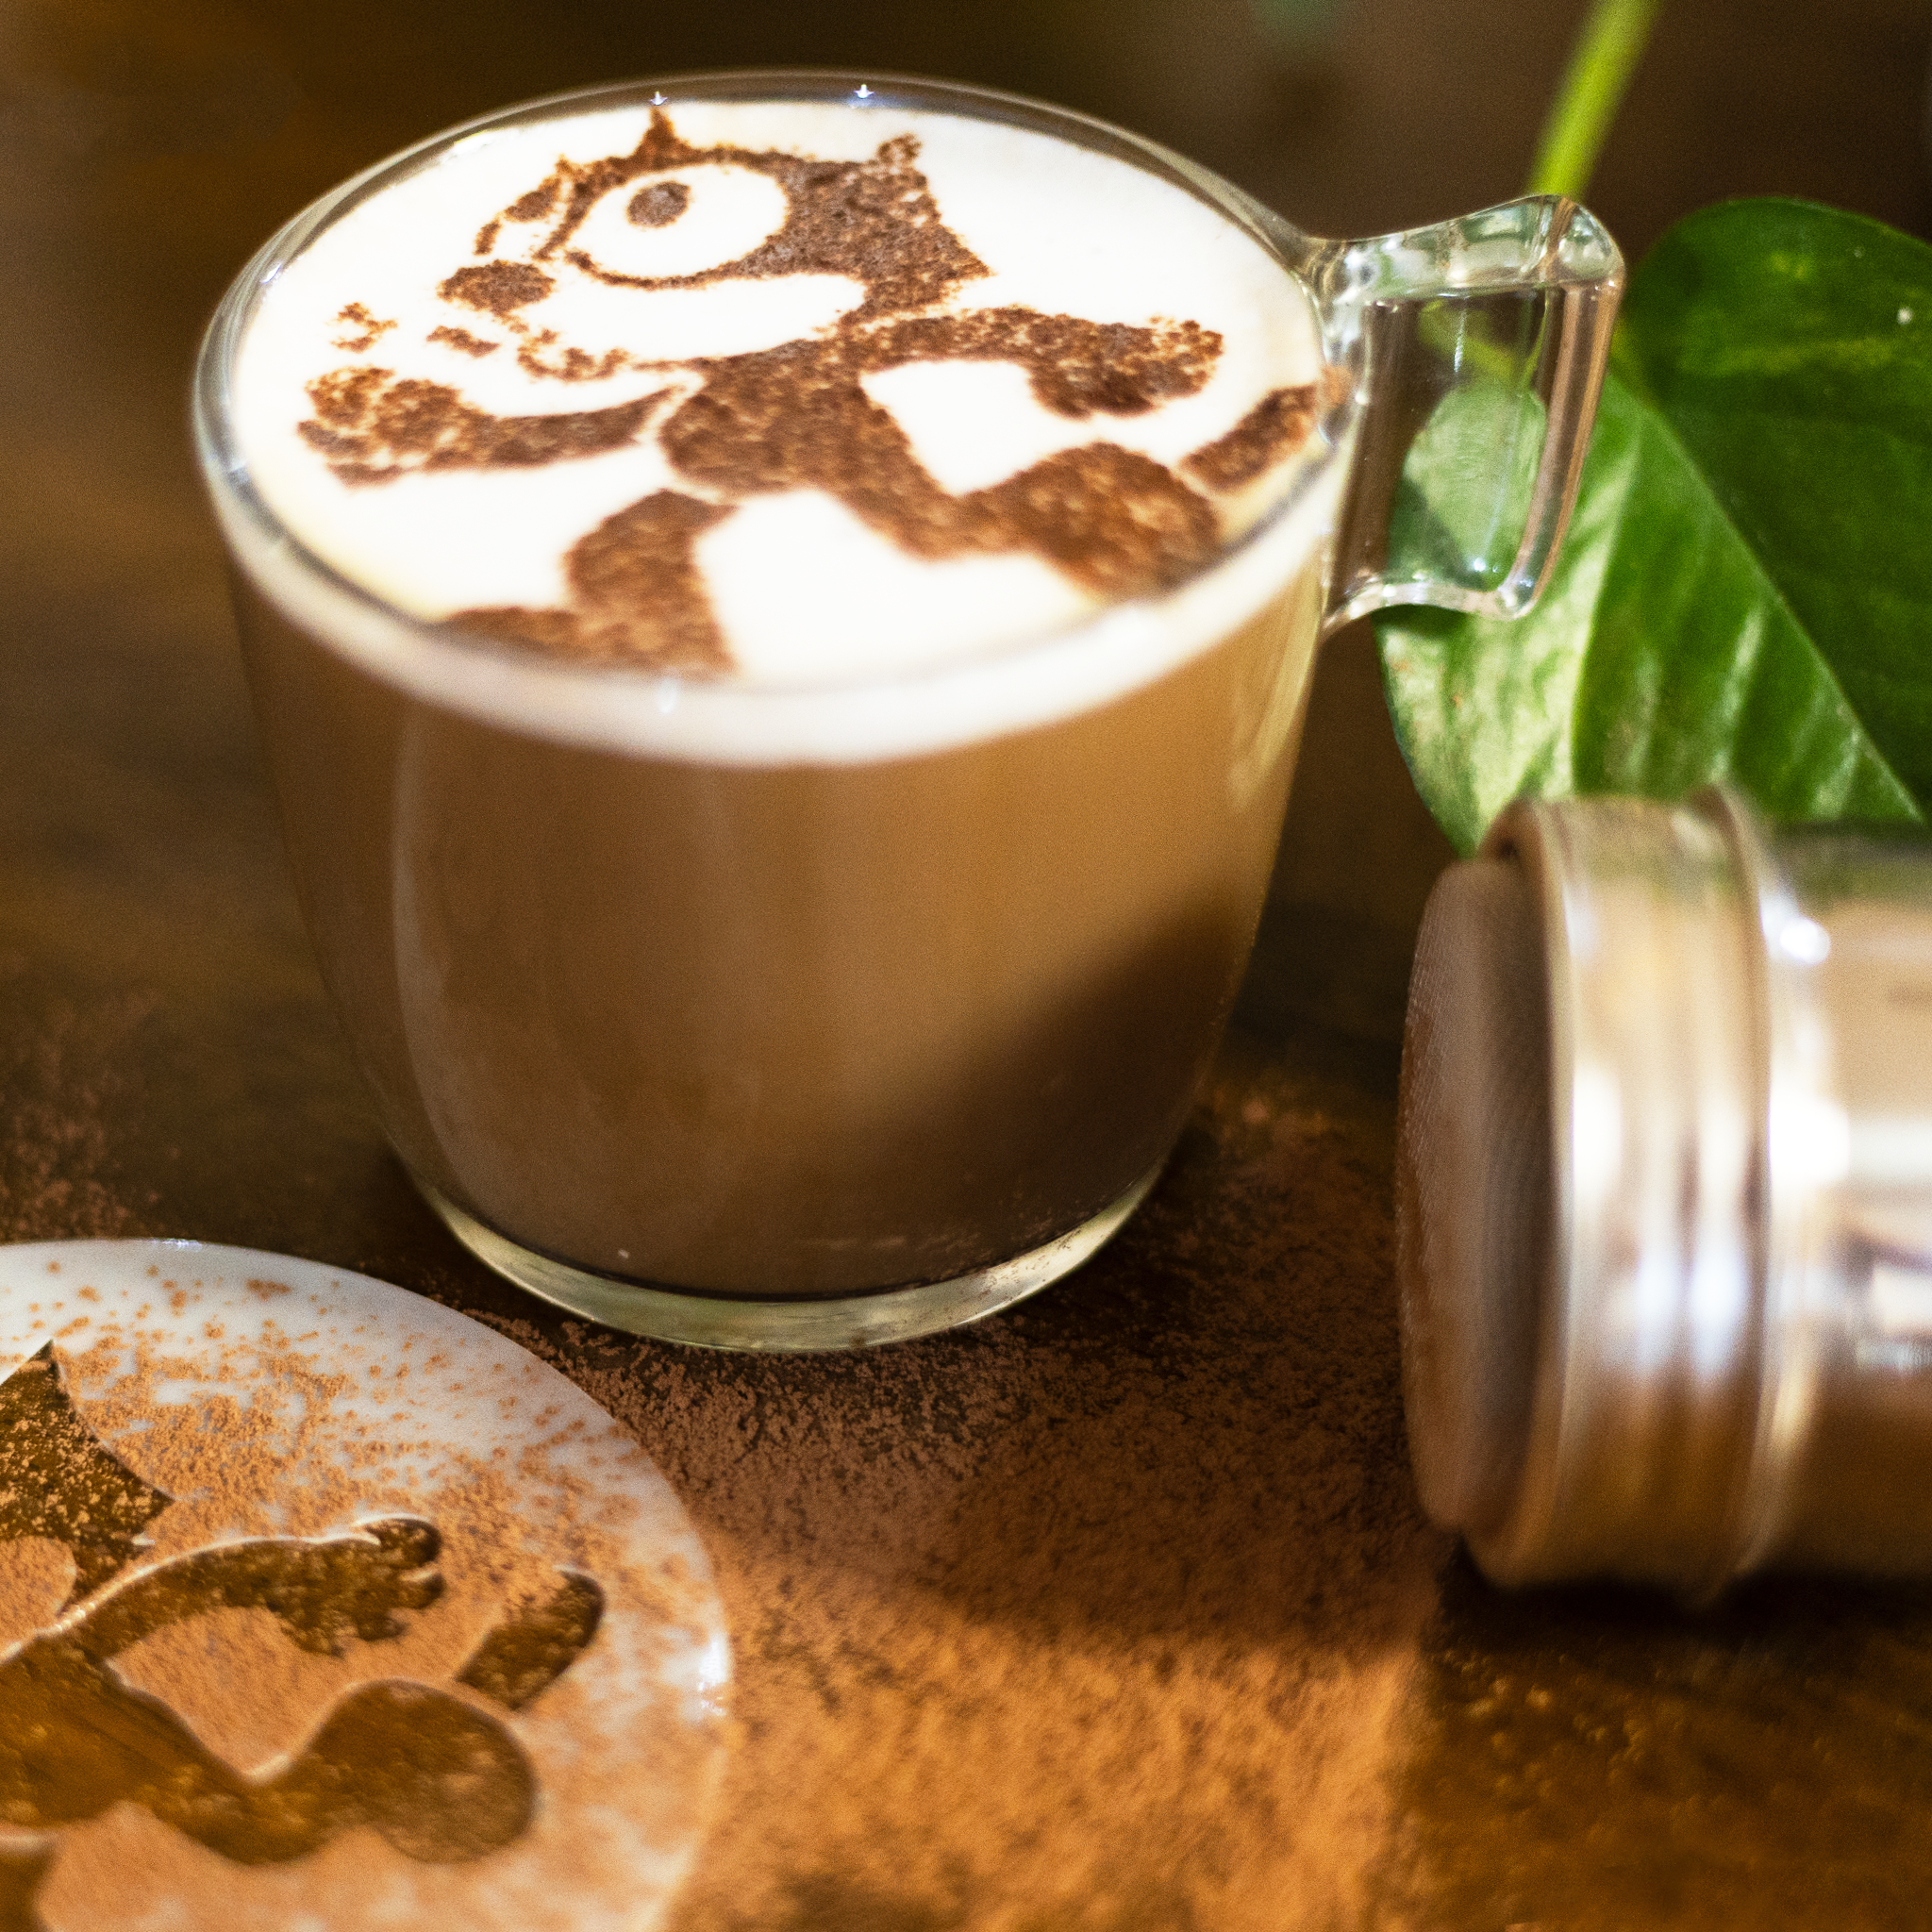 Barista Template Stainless Steel Coffee Stencils Latte Art Decorating